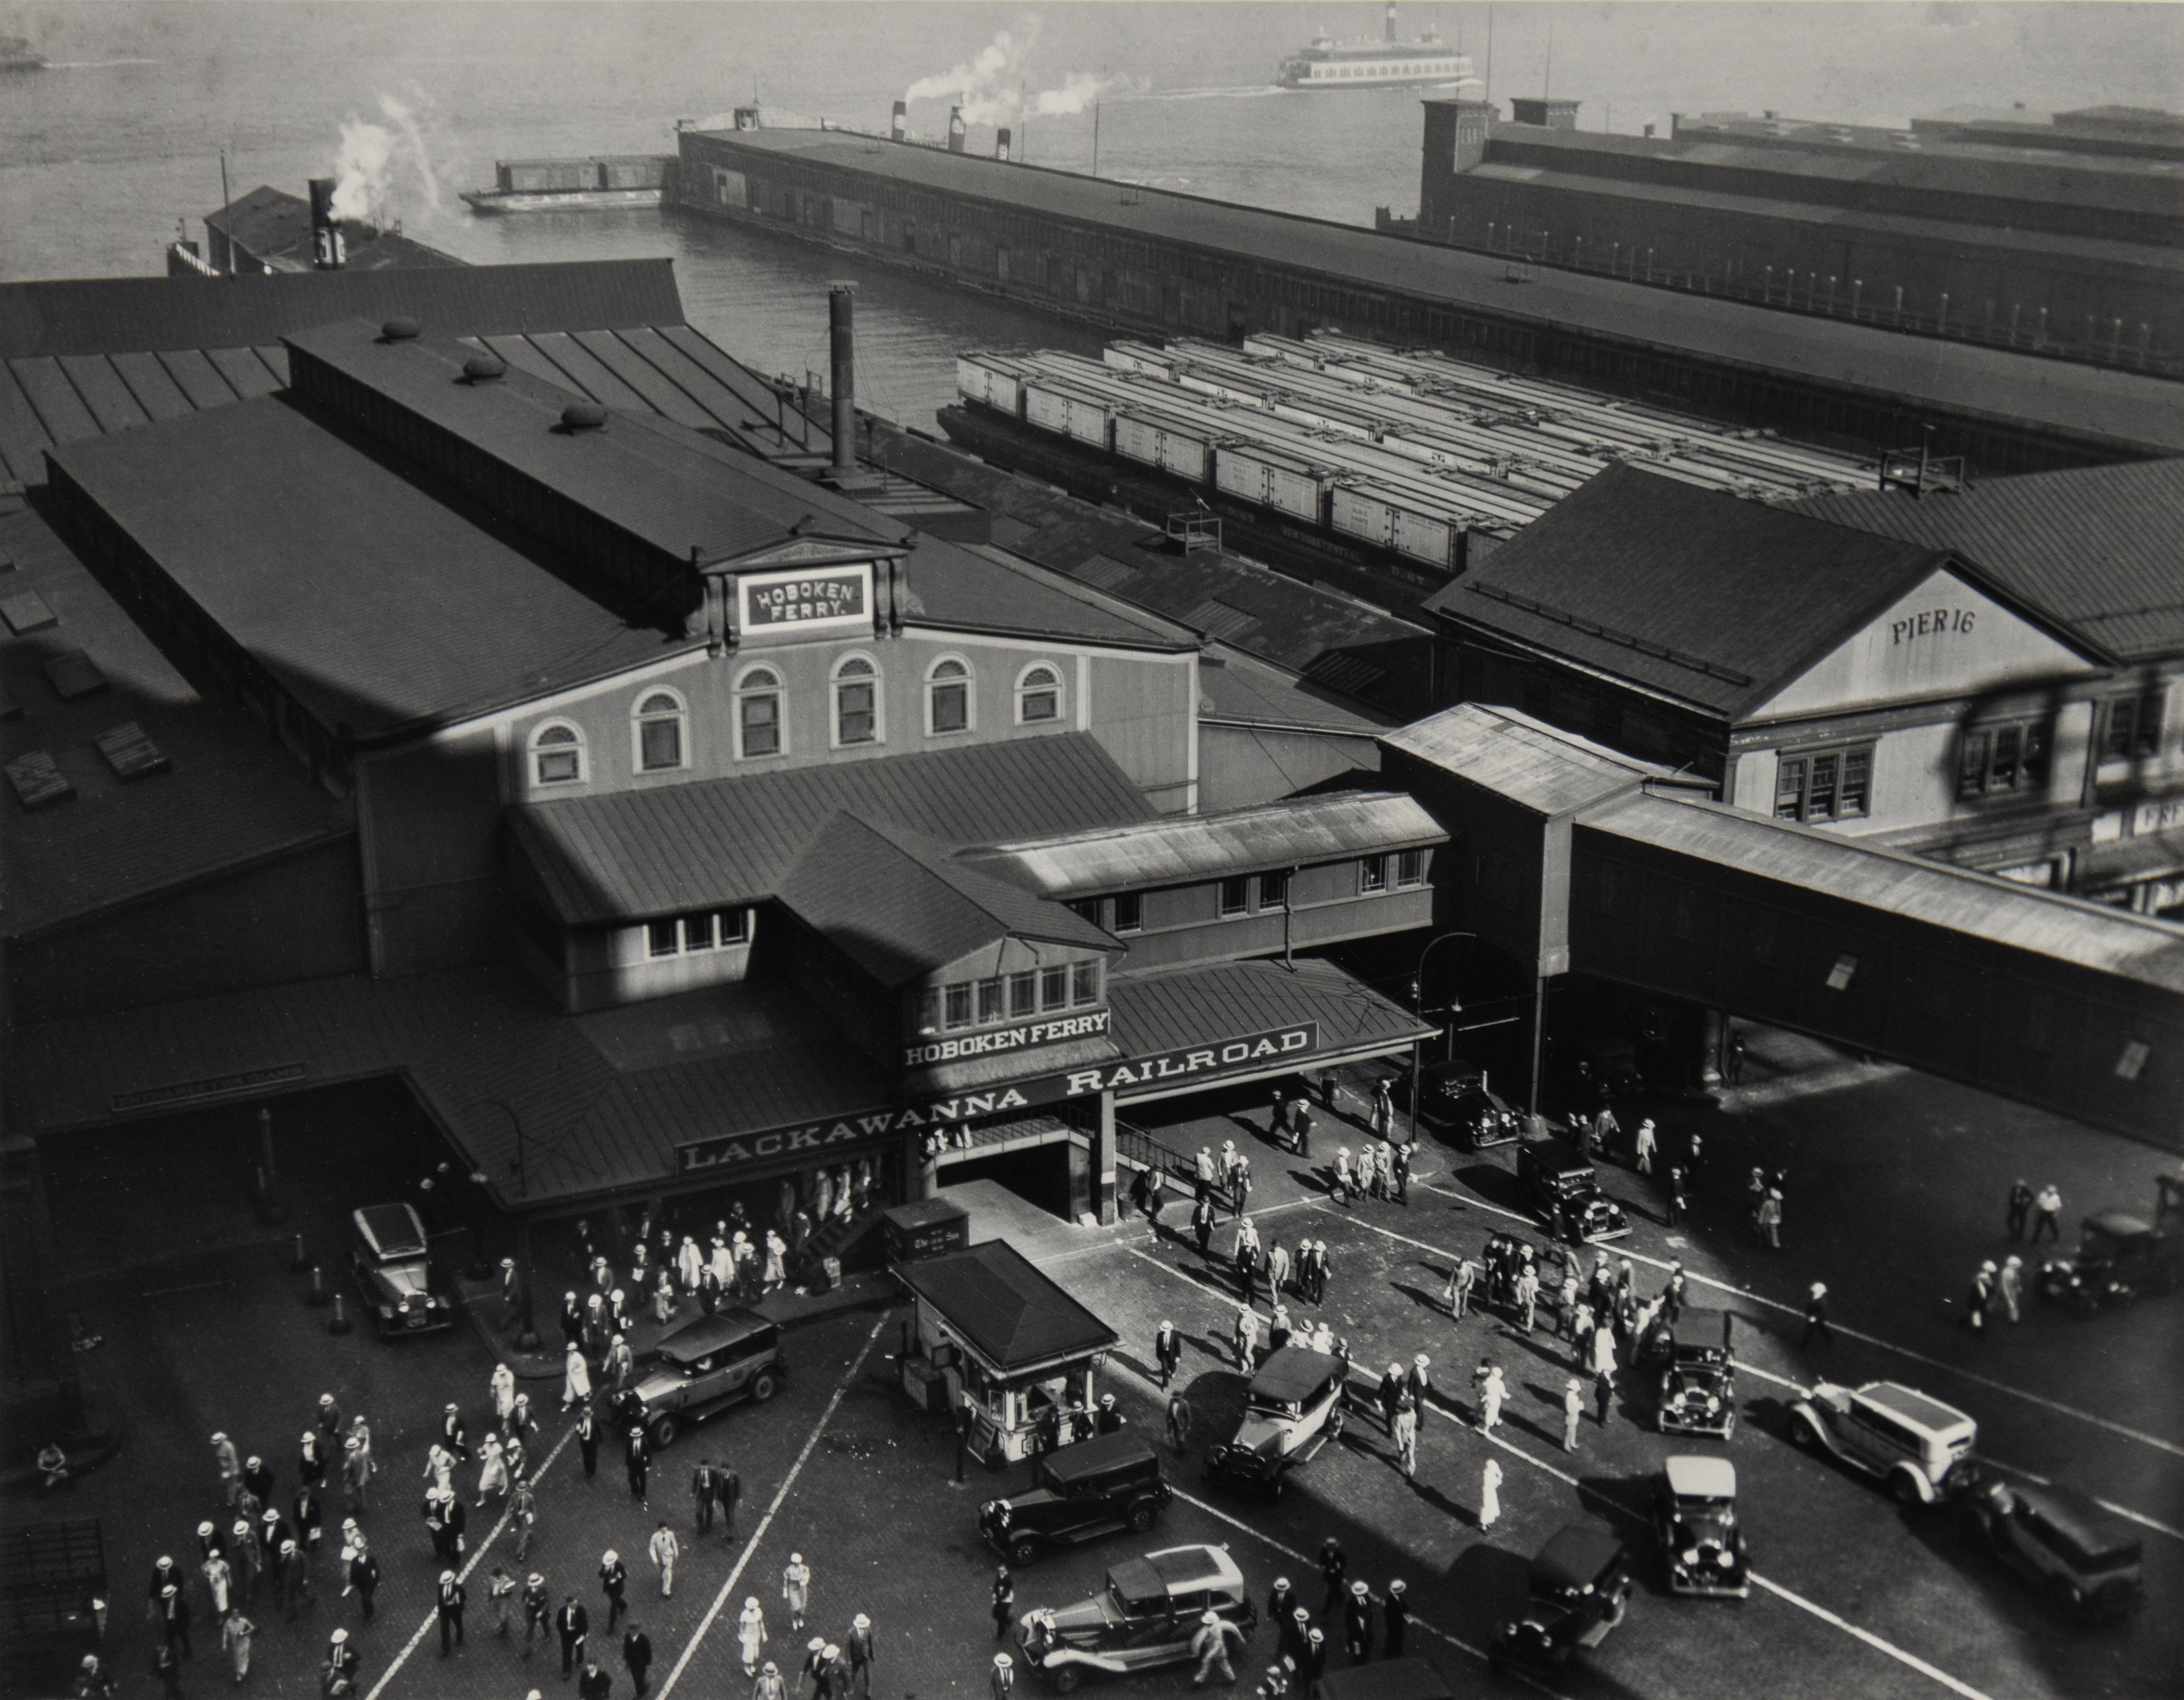 Hoboken Ferry Terminal, Lackawanna Railroad, Barclay Street, New York - Photograph by Berenice Abbott